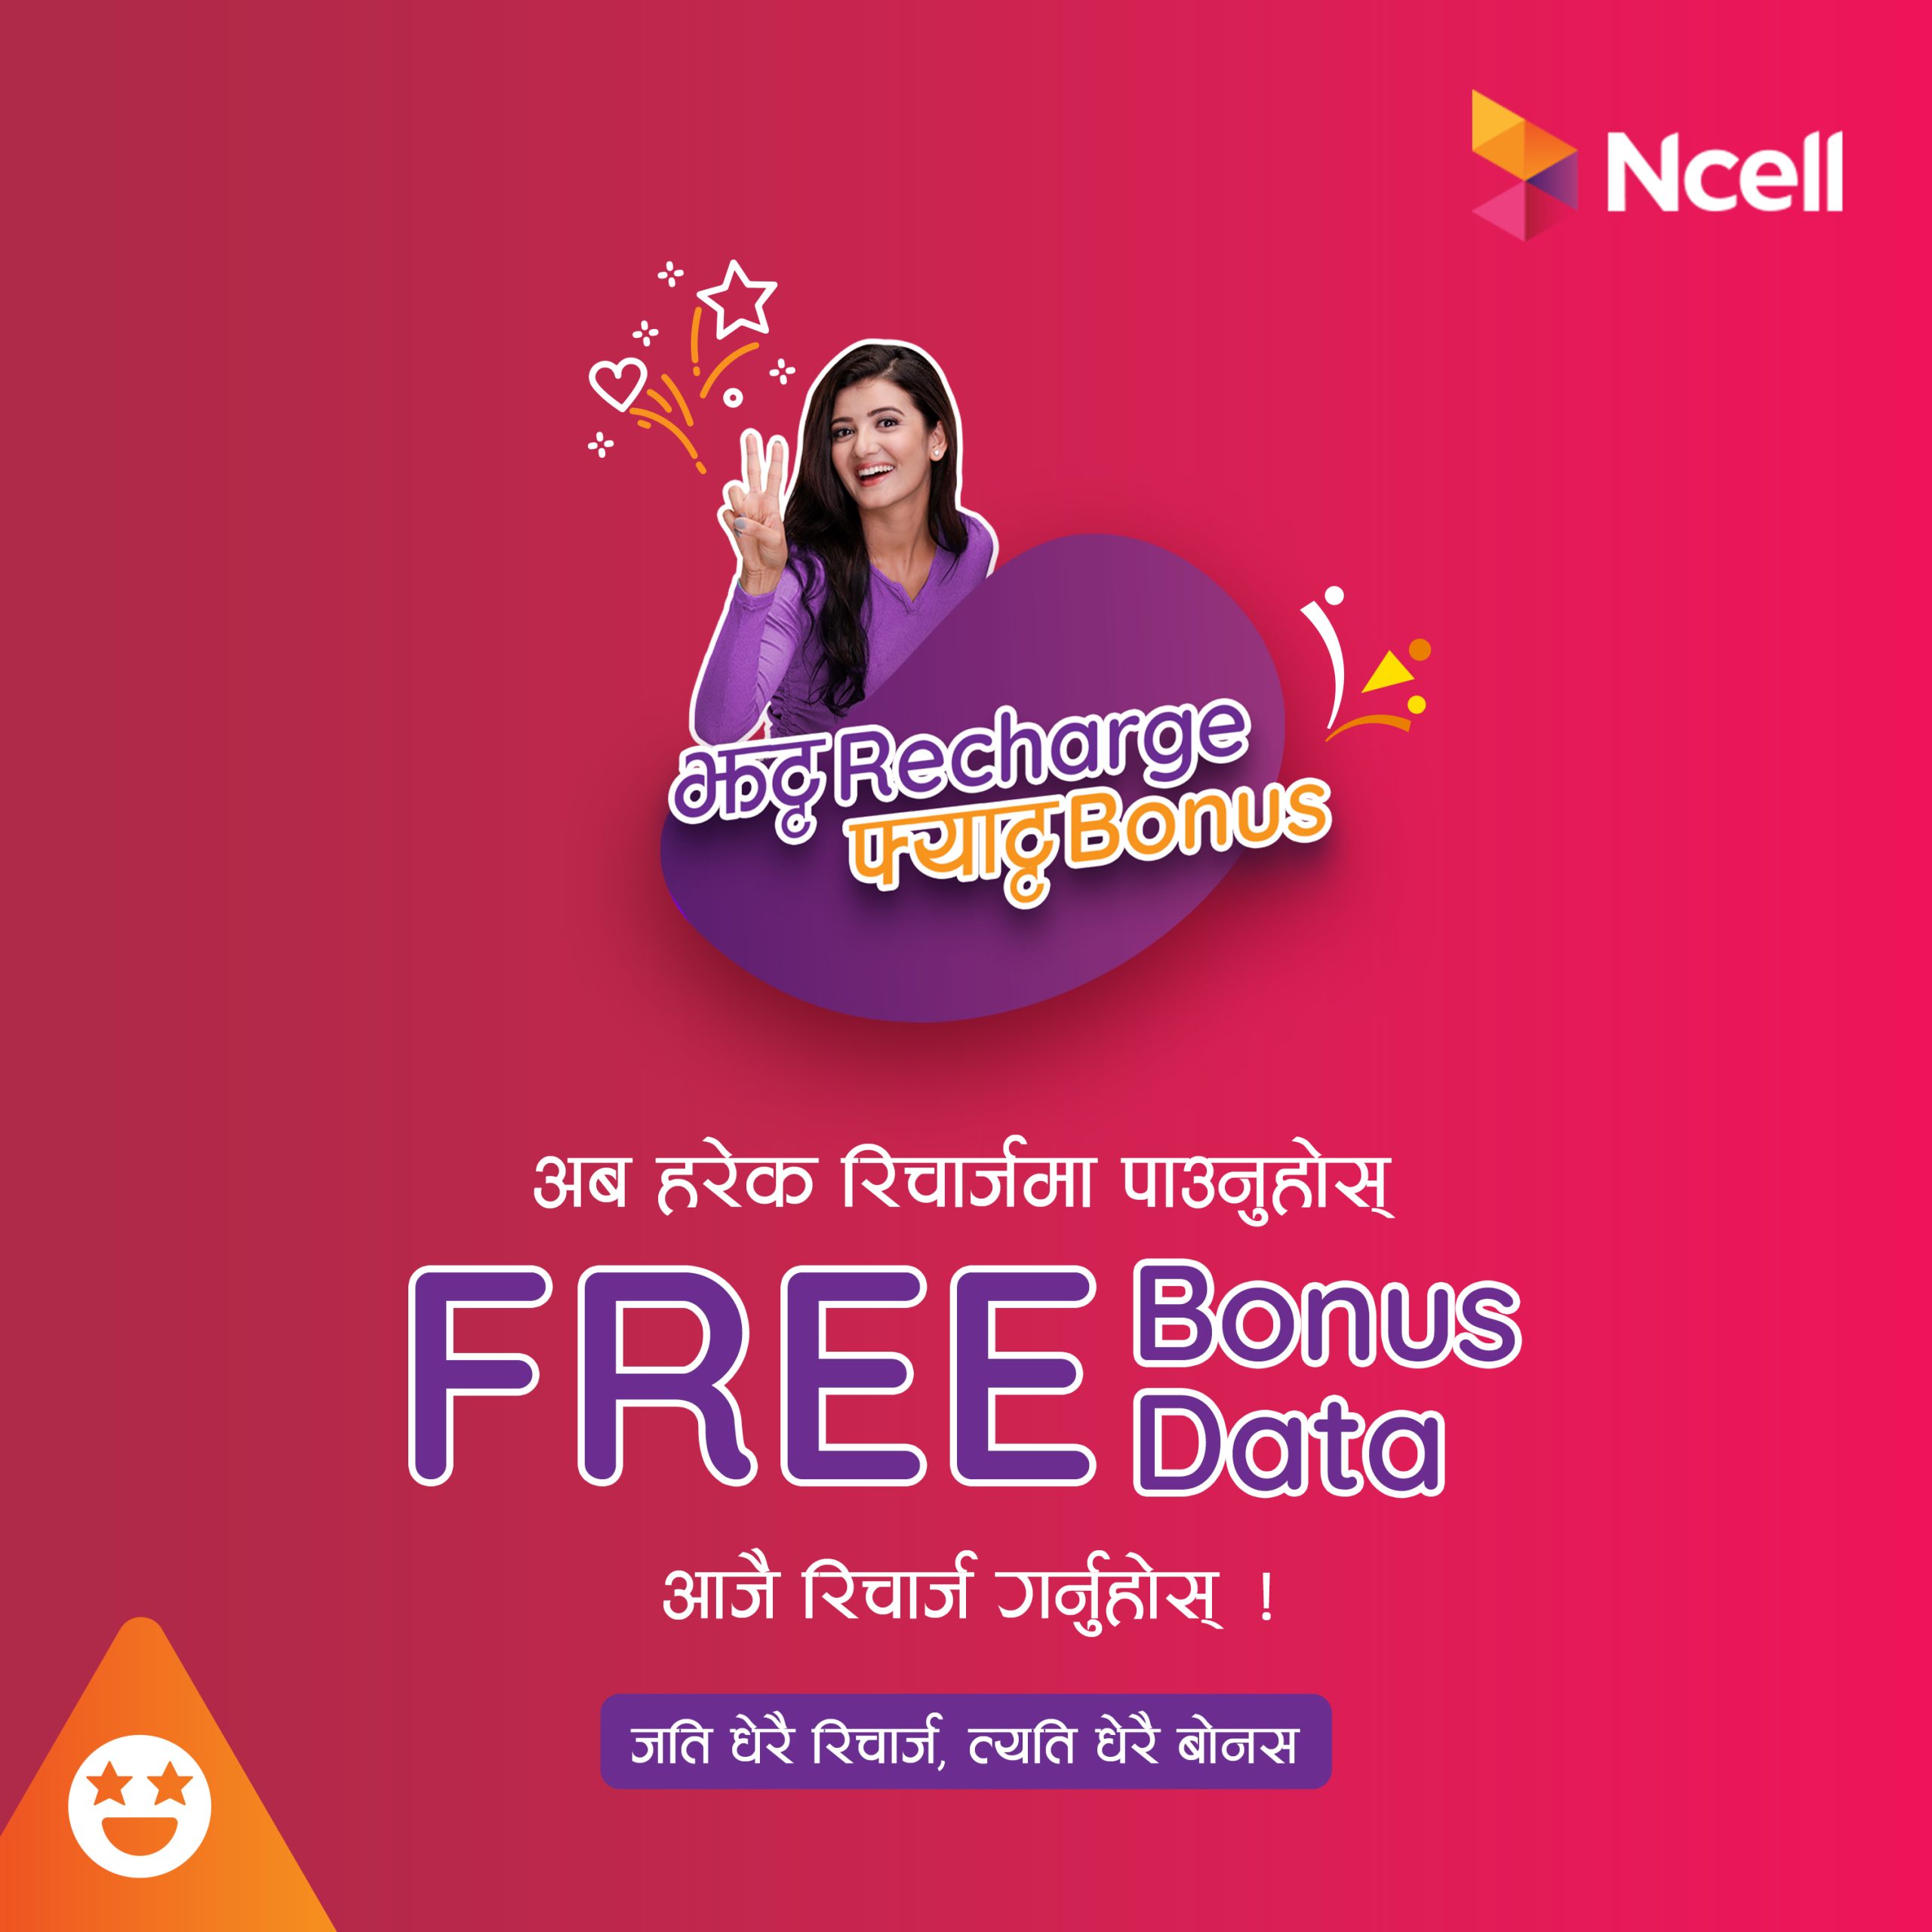 Ncell doubles free data under ‘Jhatta Recharge Fyatta Bonus’